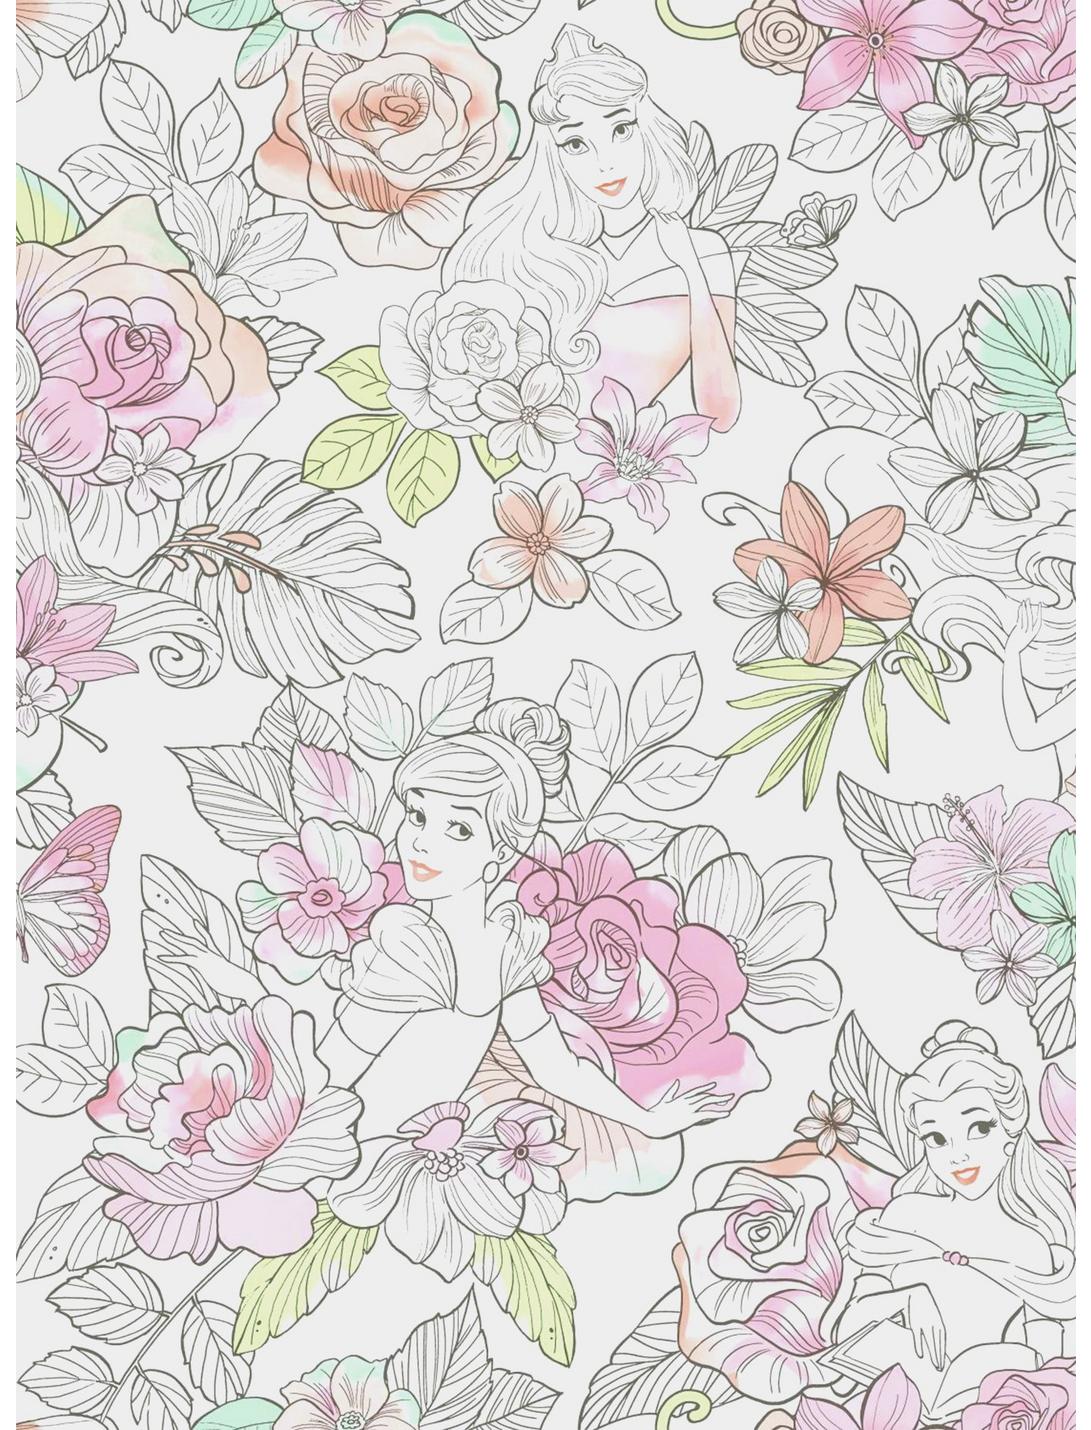 Disney Princess Royal Floral Peel & Stick Wallpaper, , hi-res